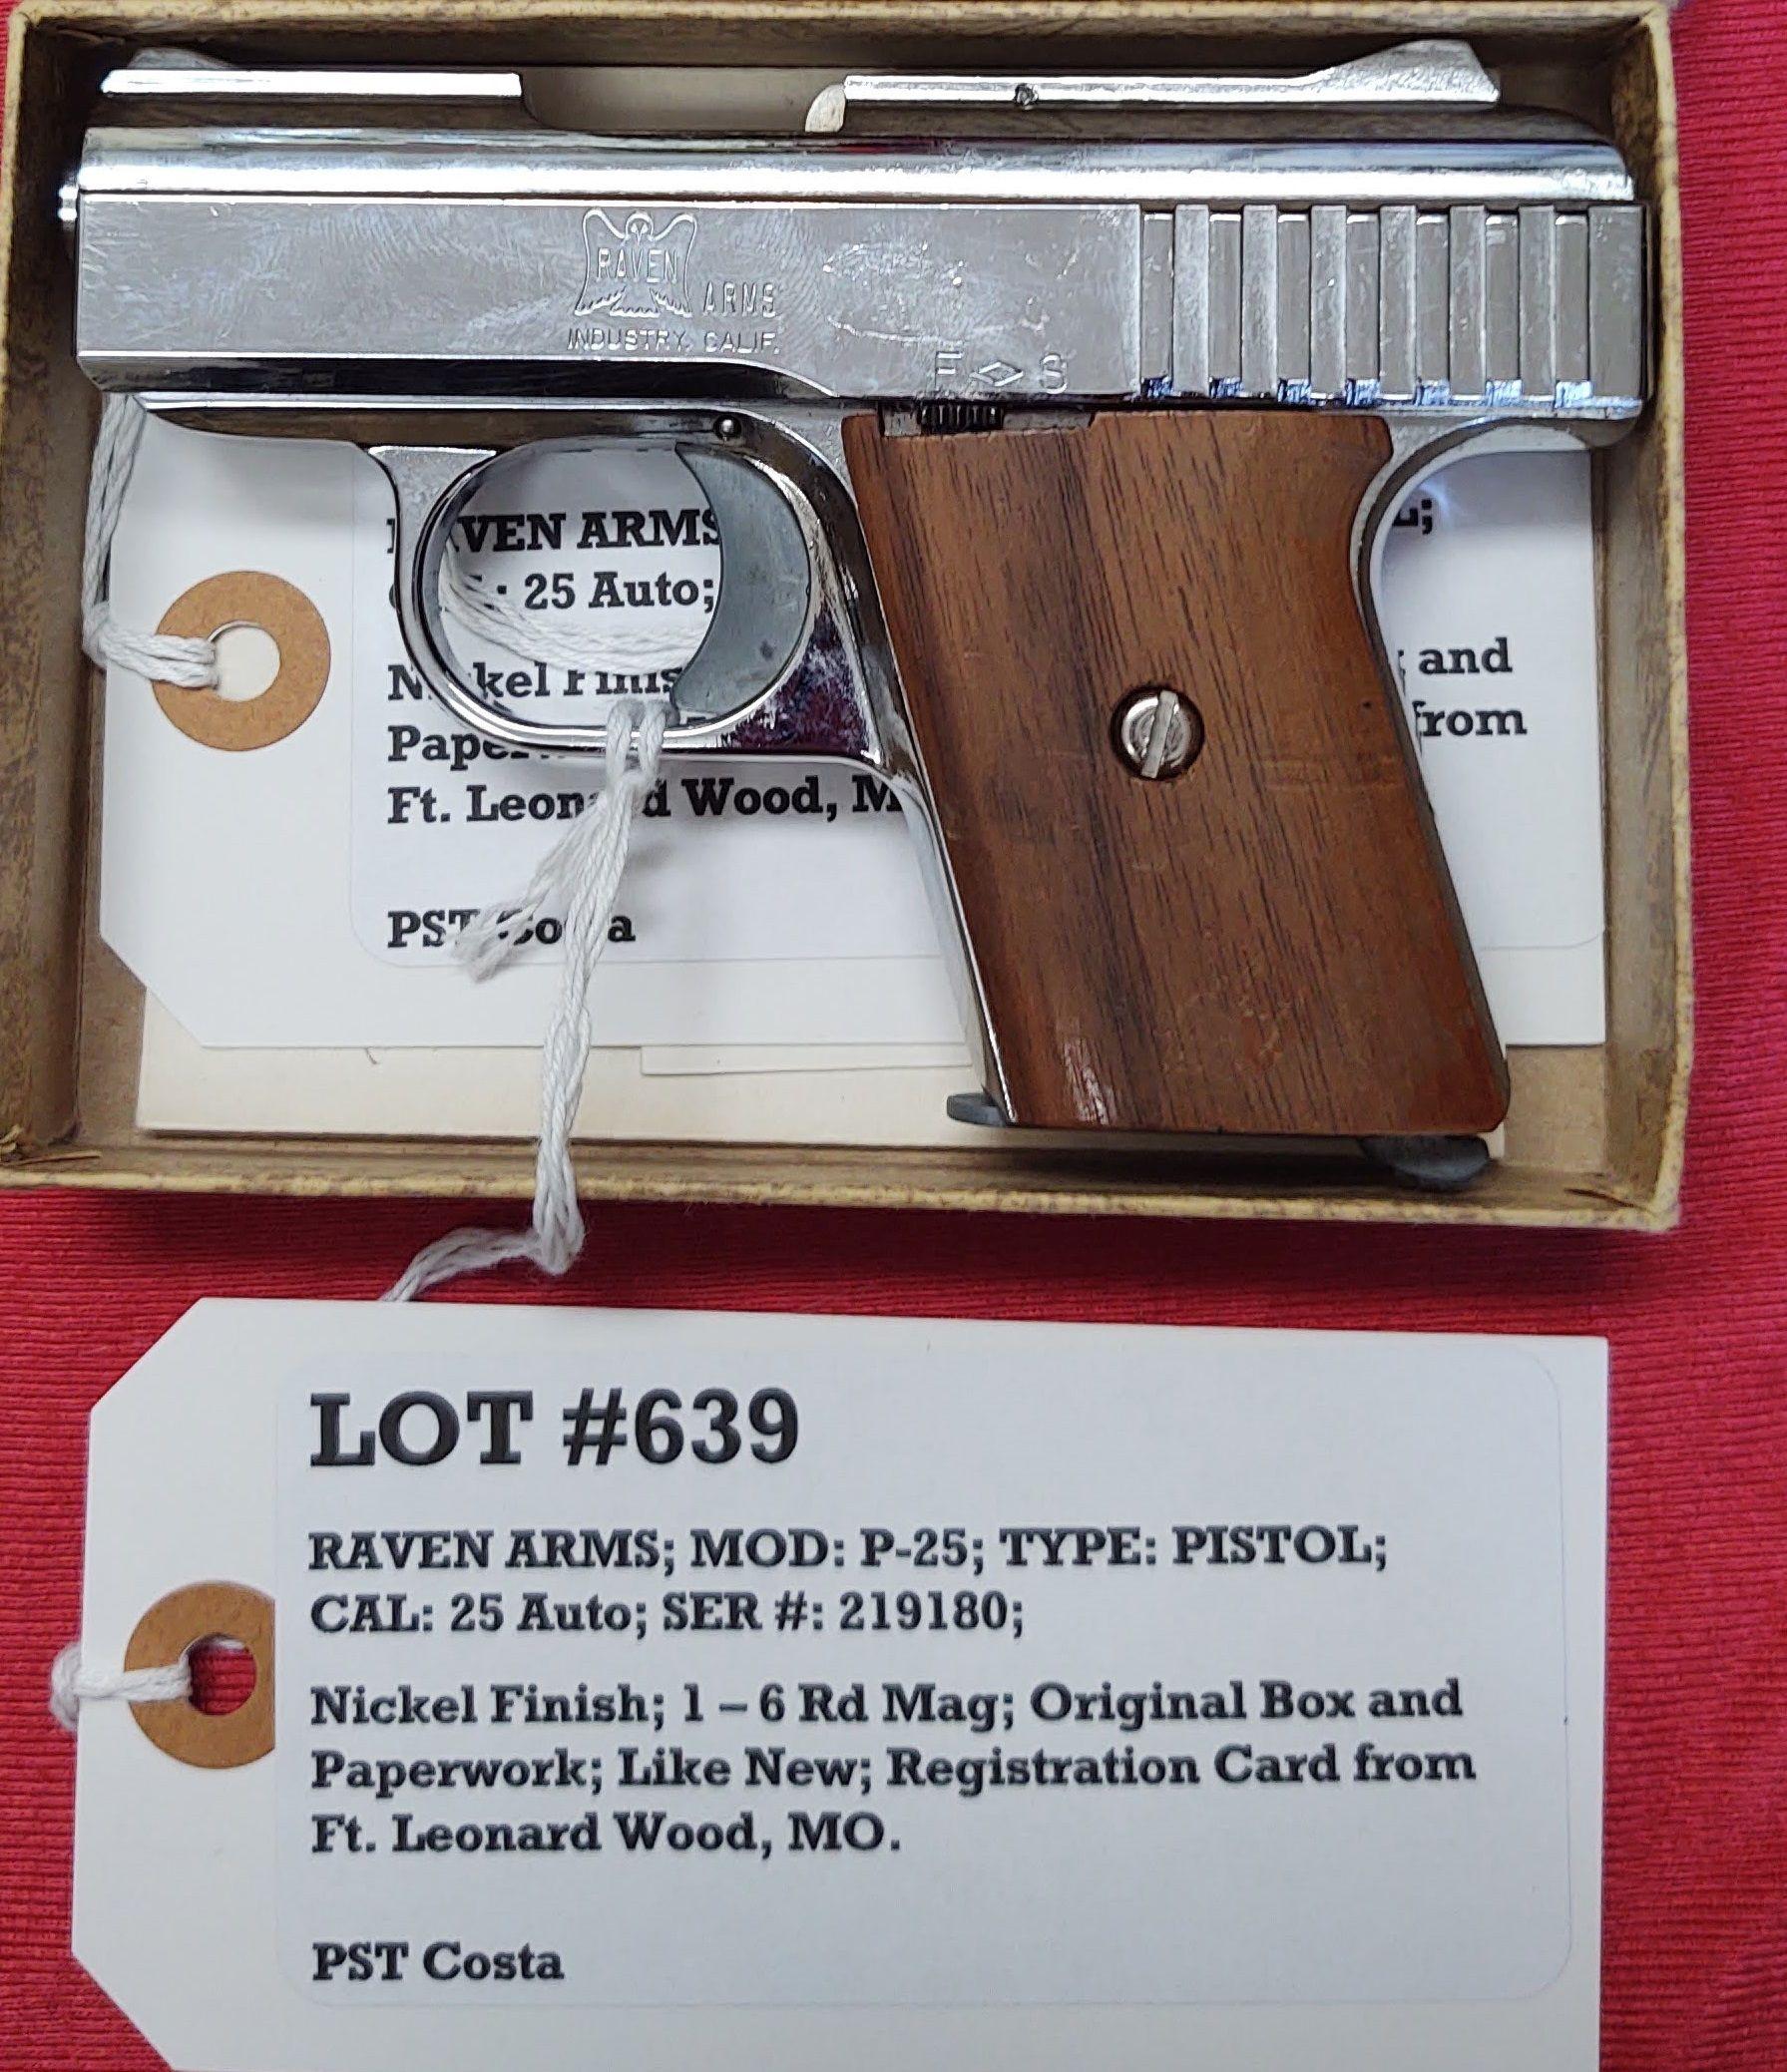 RAVEN ARMS Model P-25 Cal 25 Auto Pistol Ser #219180